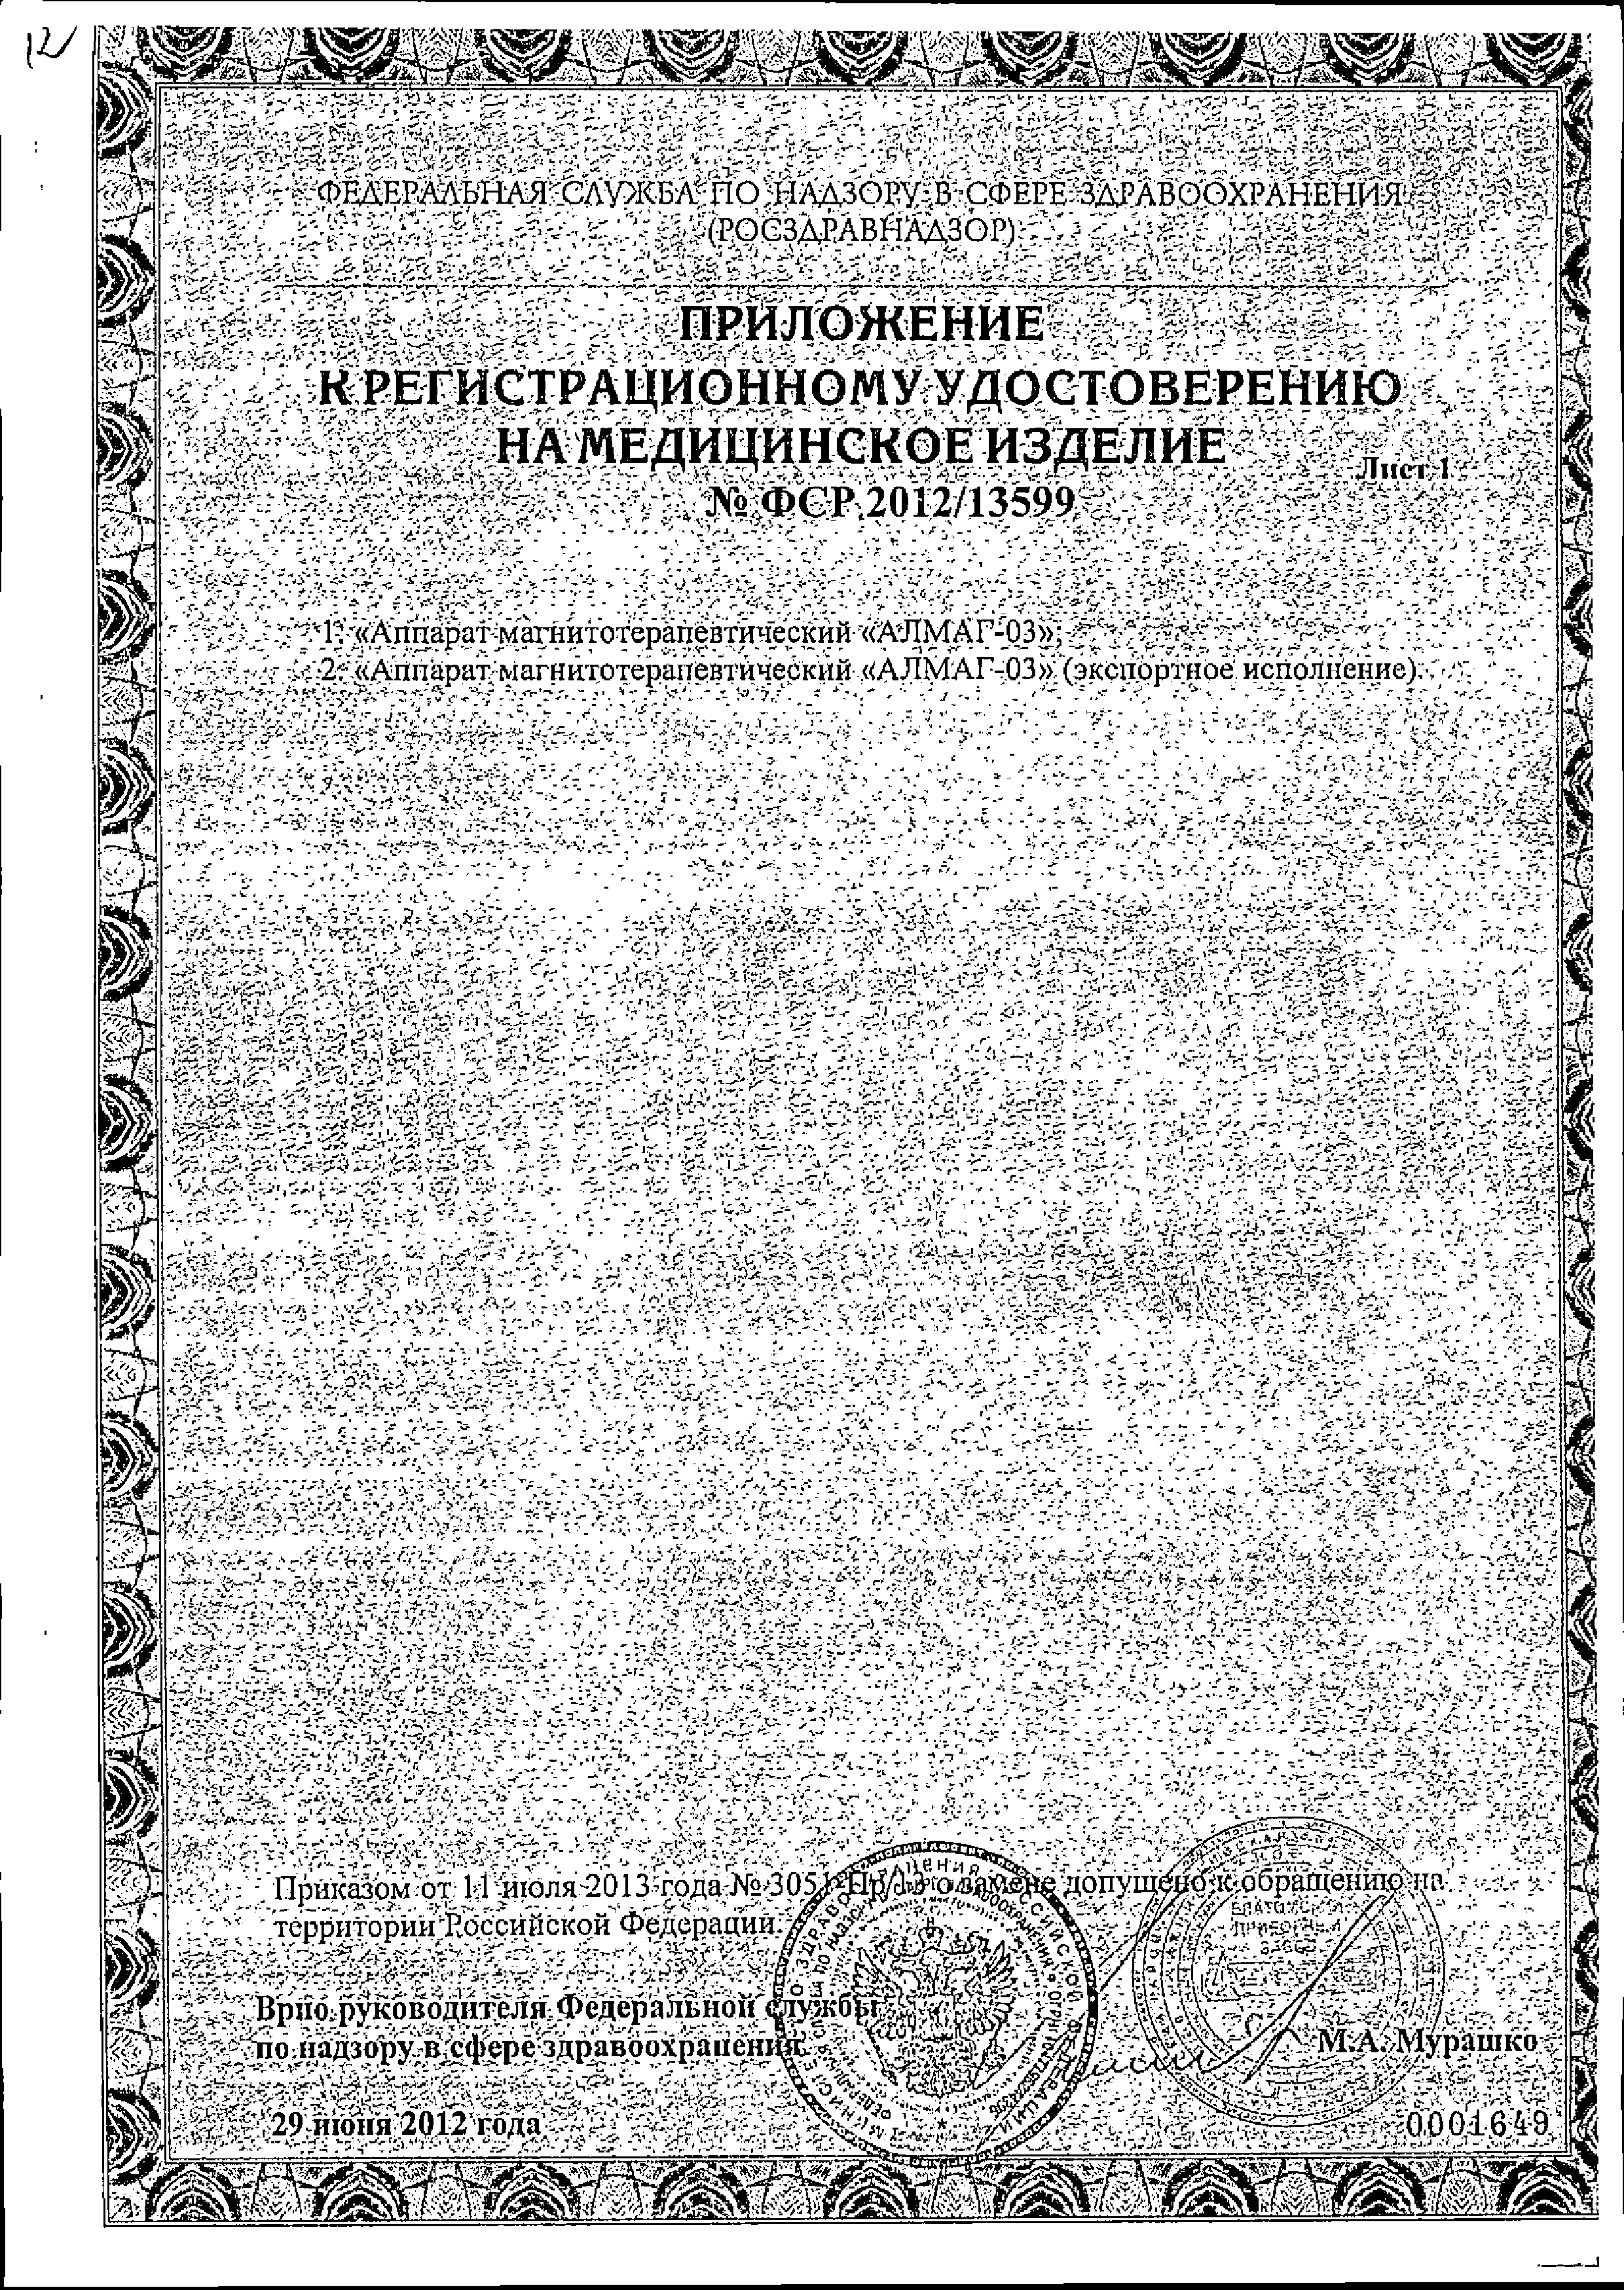 Алмаг-03 Диамаг Аппарат магнитотерапевтический сертификат